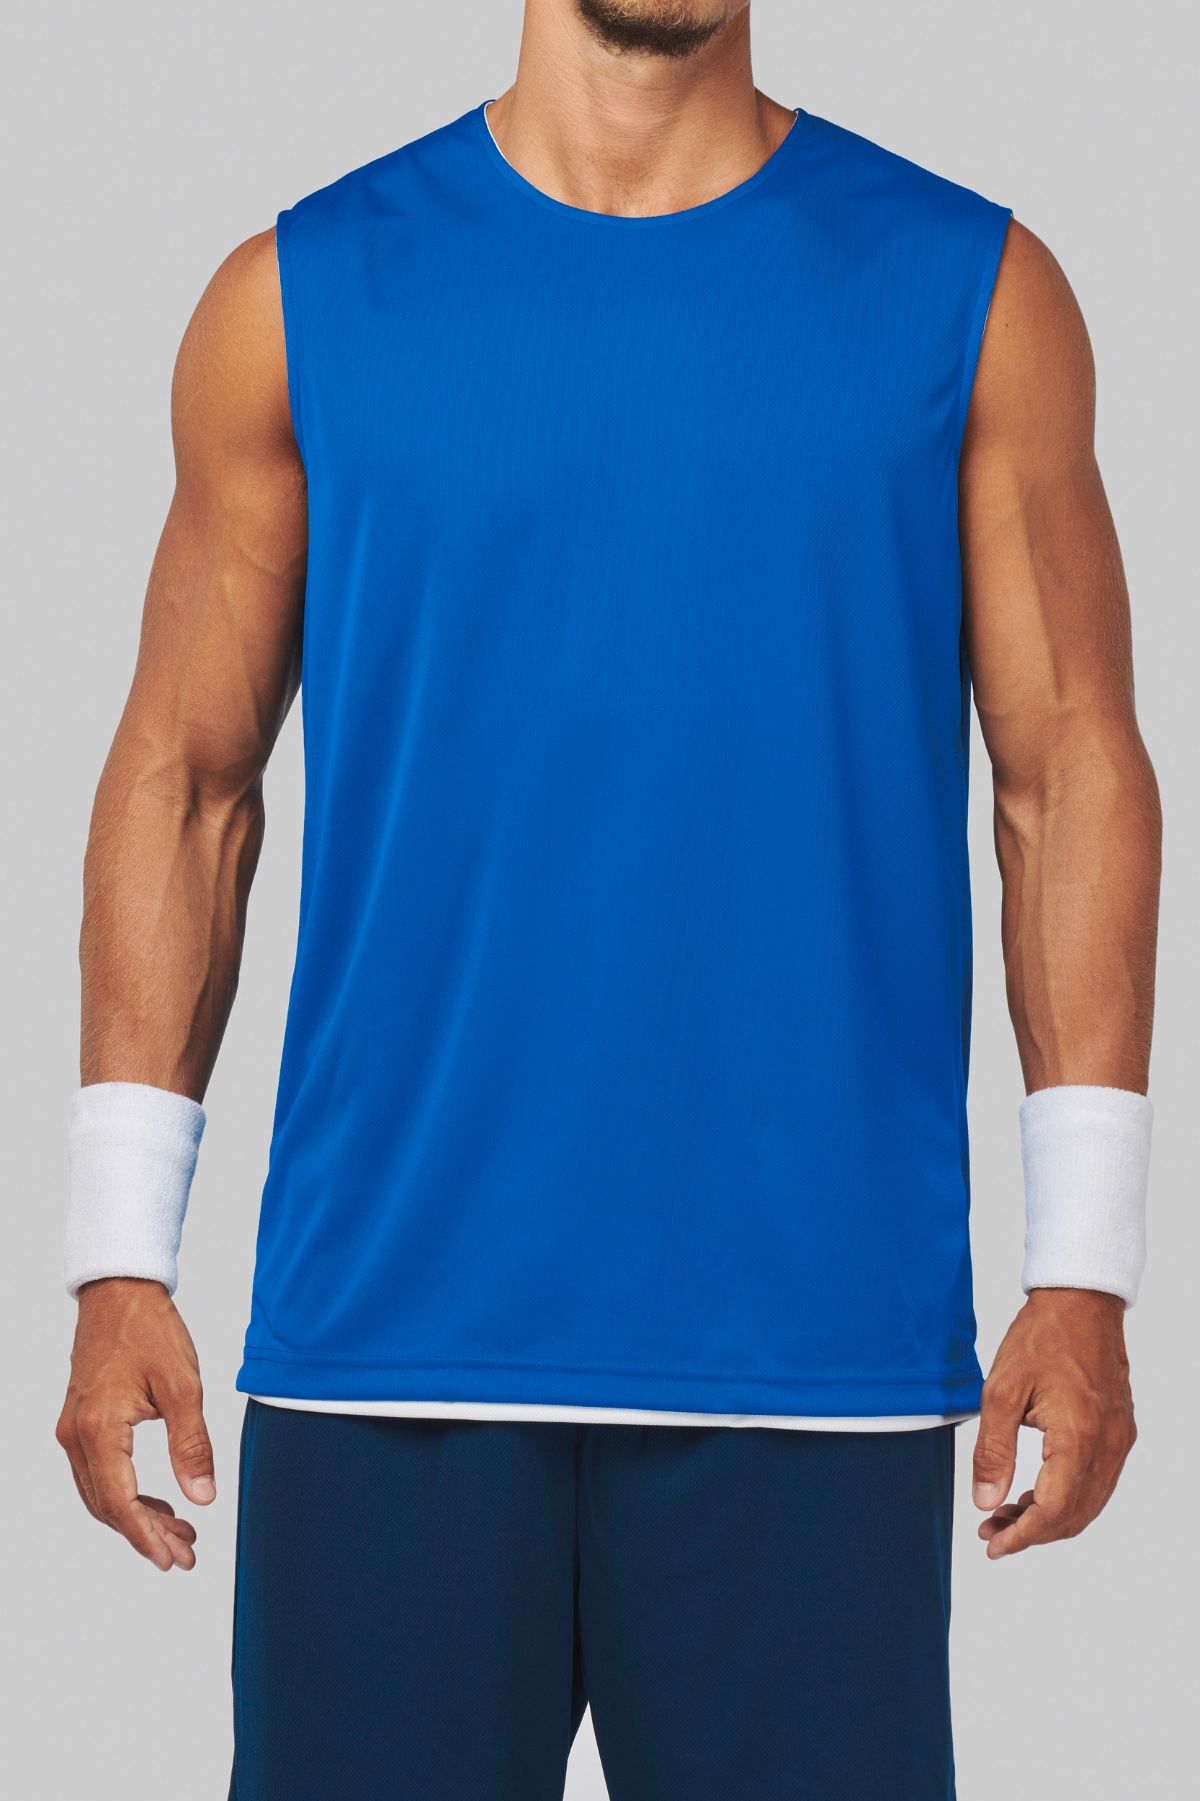 Sportovní dres - oboustranné trièko bez rukávù